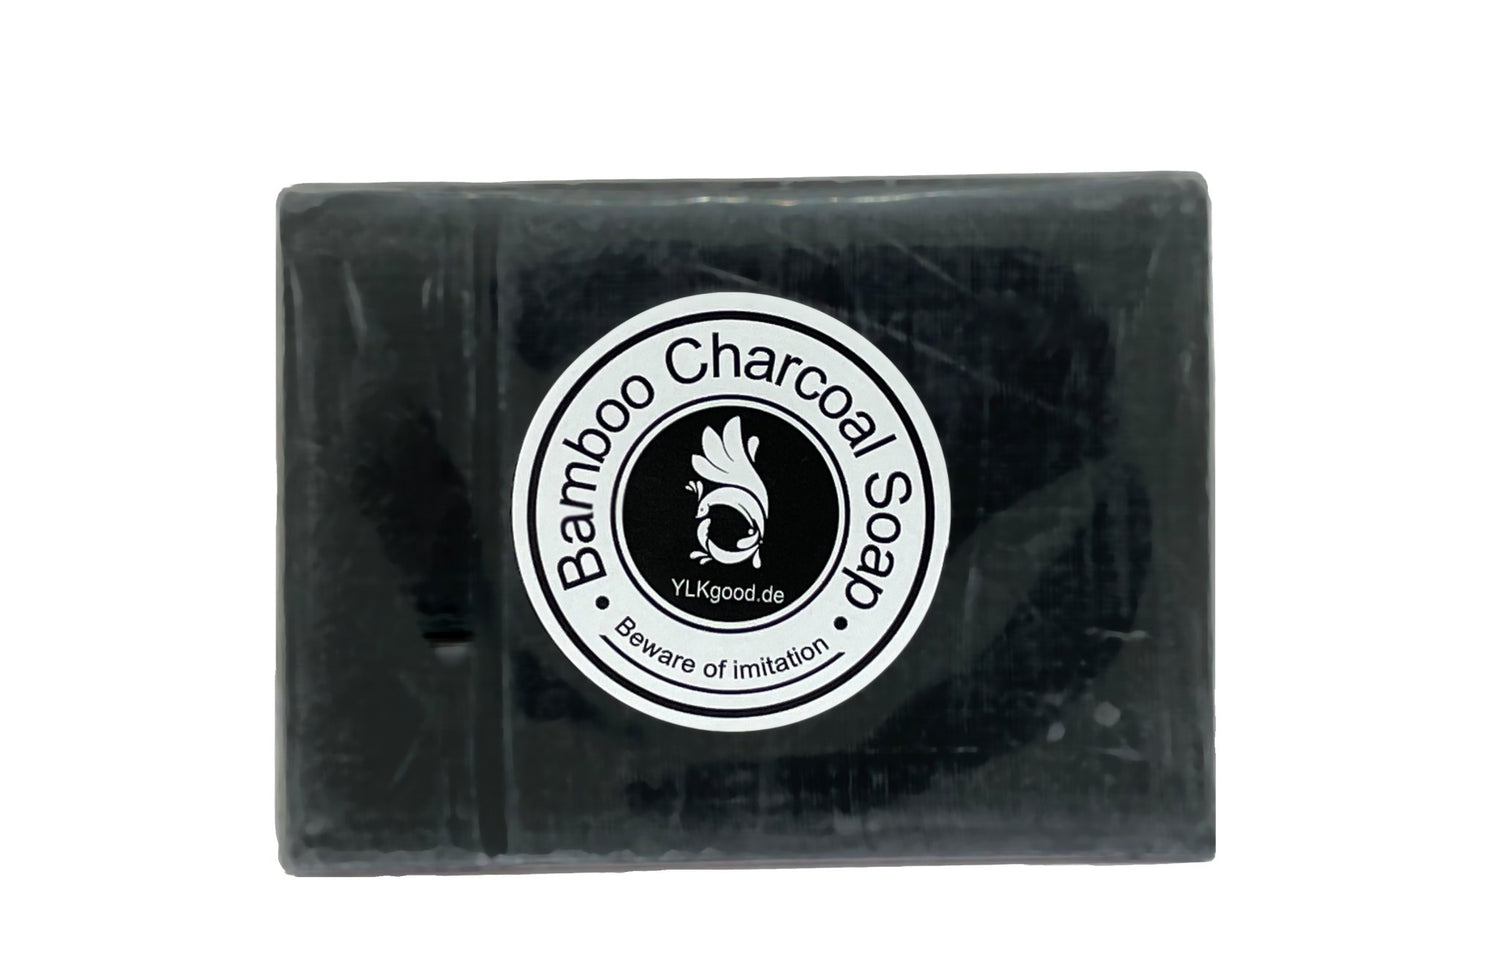 Bamboo Charcoal Soap | 100g Original YLKgood anti-bakterielle anti-akne Seife - YLKgood